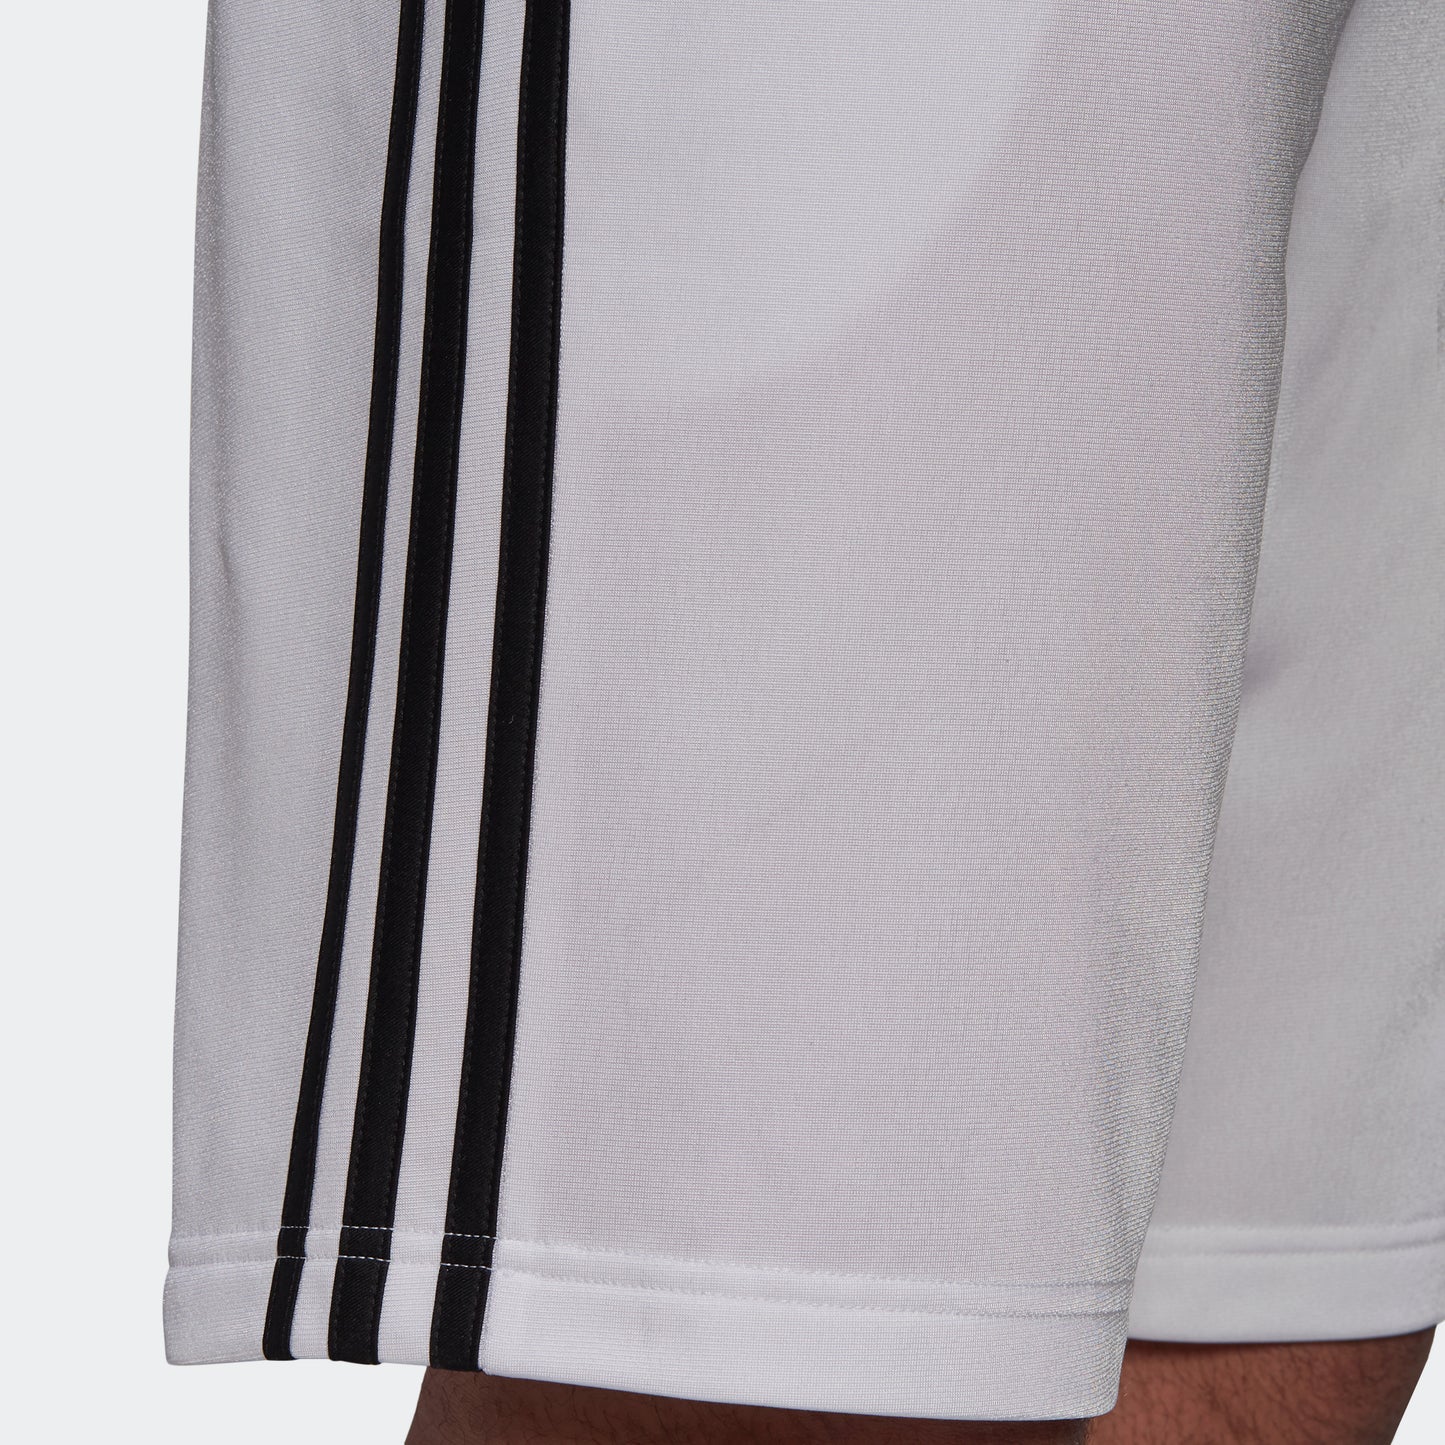 adidas Primegreen Essentials Warm Up Shorts | White | Men's